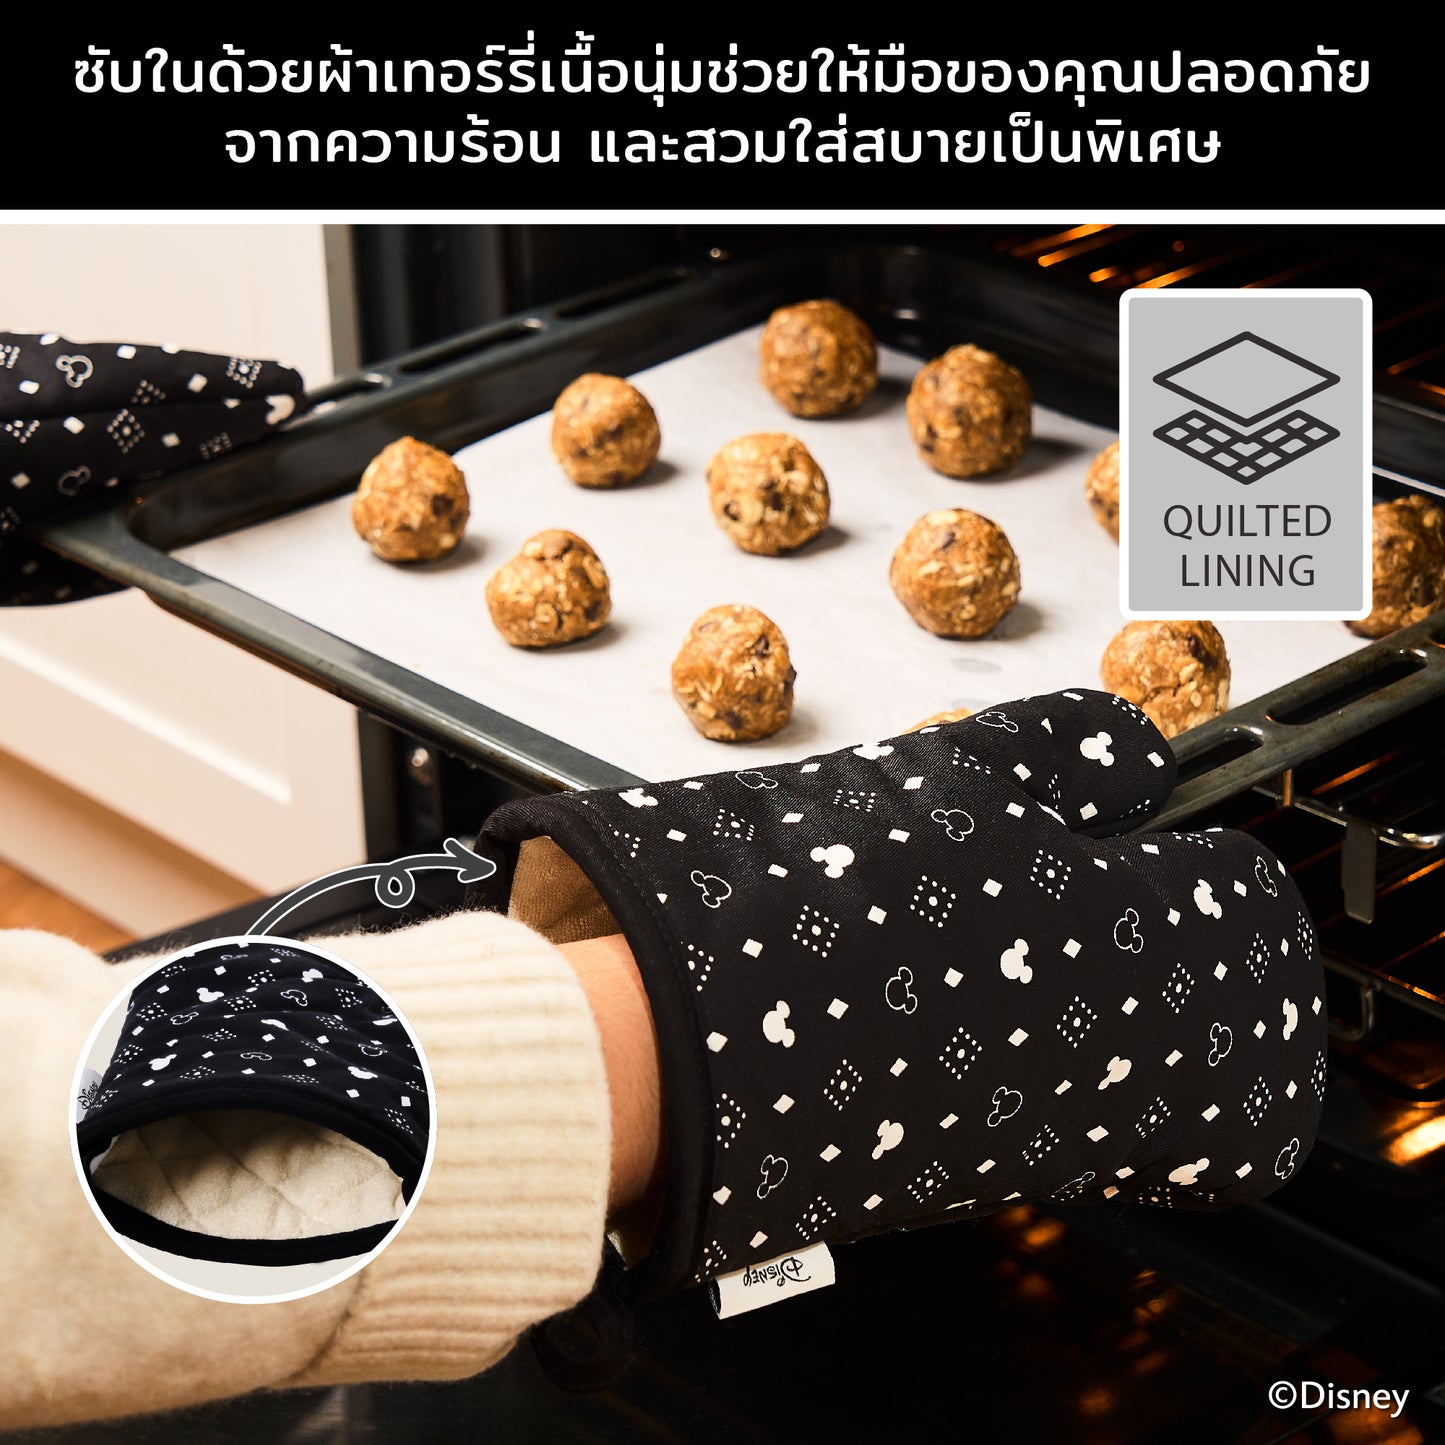 DISNEY MONOCHROME ชุดเซ็ตถุงมือจับของร้อน ลายมิคกี้ เมาส์  ลิขสิทธิ์แท้  สีดำ  Oven glove set (Charcoal version) (48950-C)